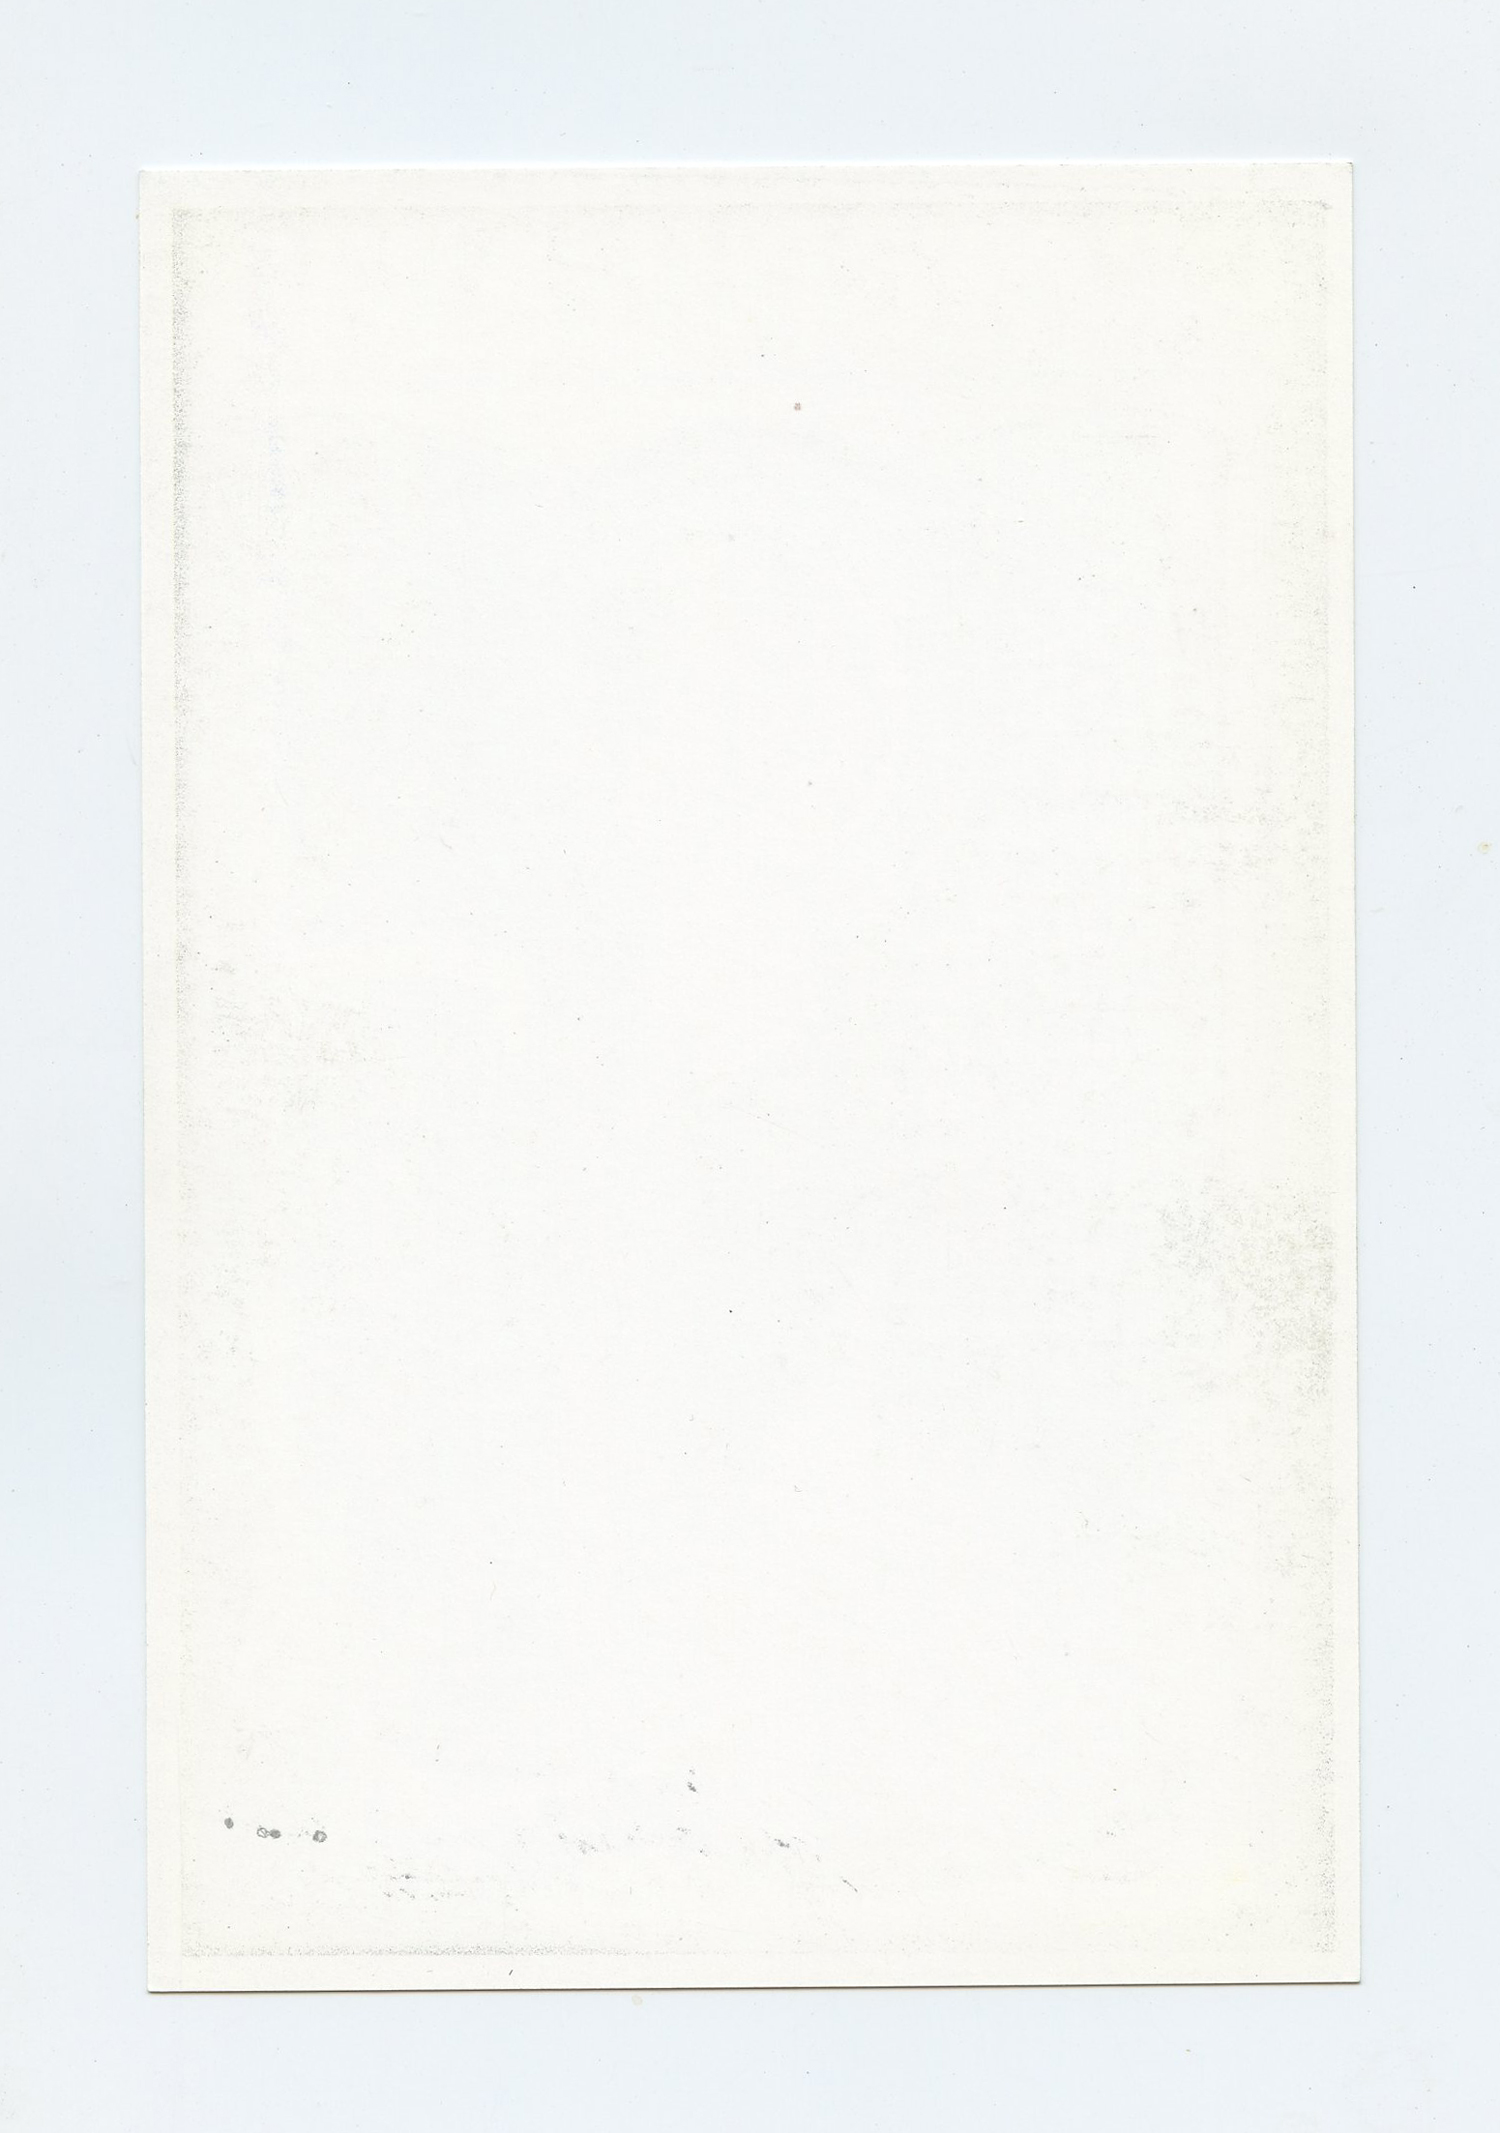 Grateful Dead Handbill 1967 Jul 14 Vancouver AOR 3.179  2nd Printing